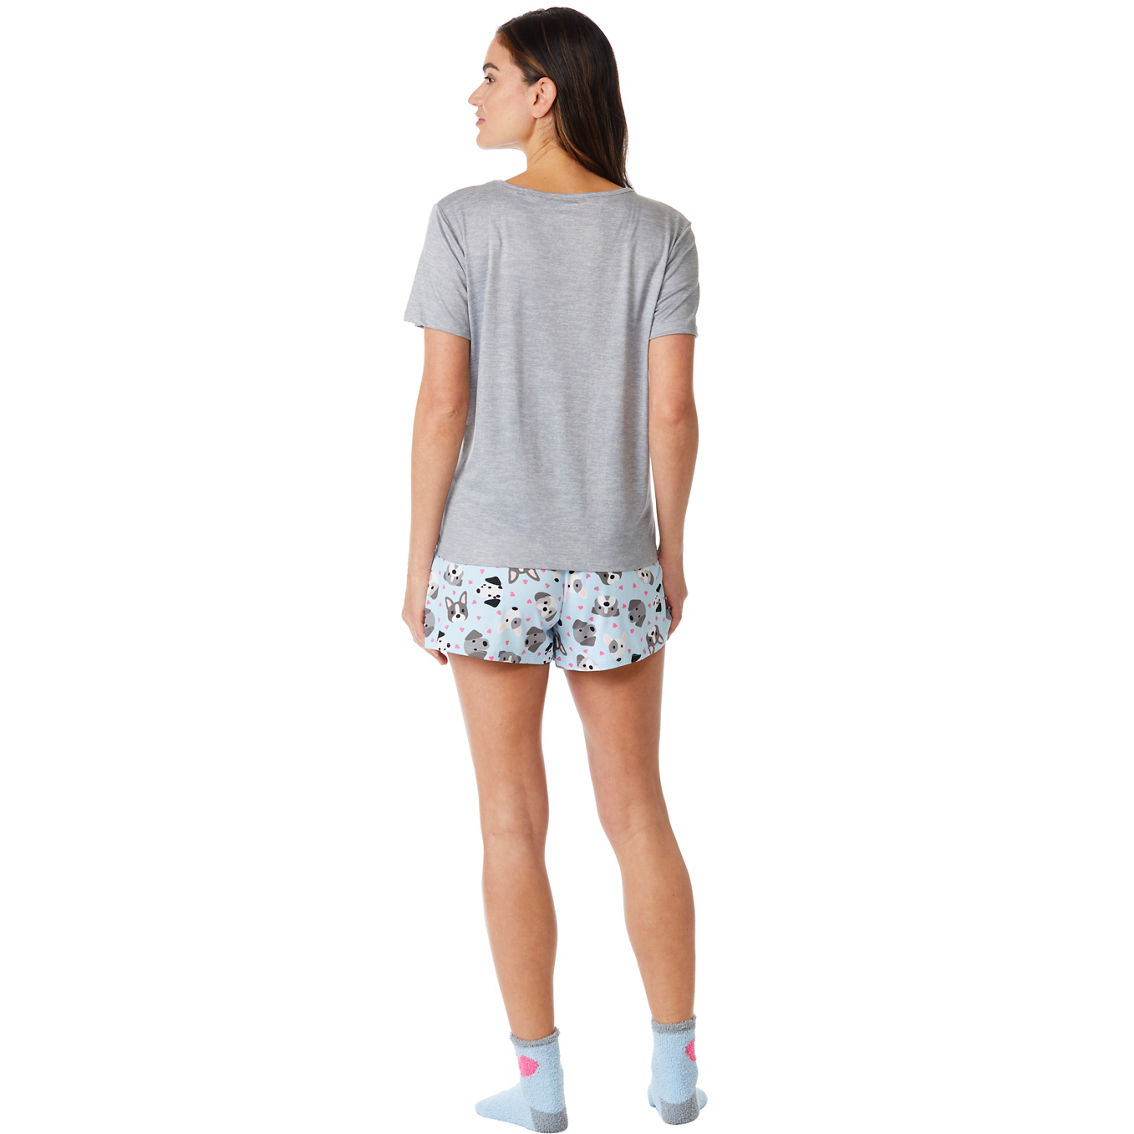 Rene Rofe Kiss Me Top and Shorts Pajama Set with Socks - Image 2 of 3